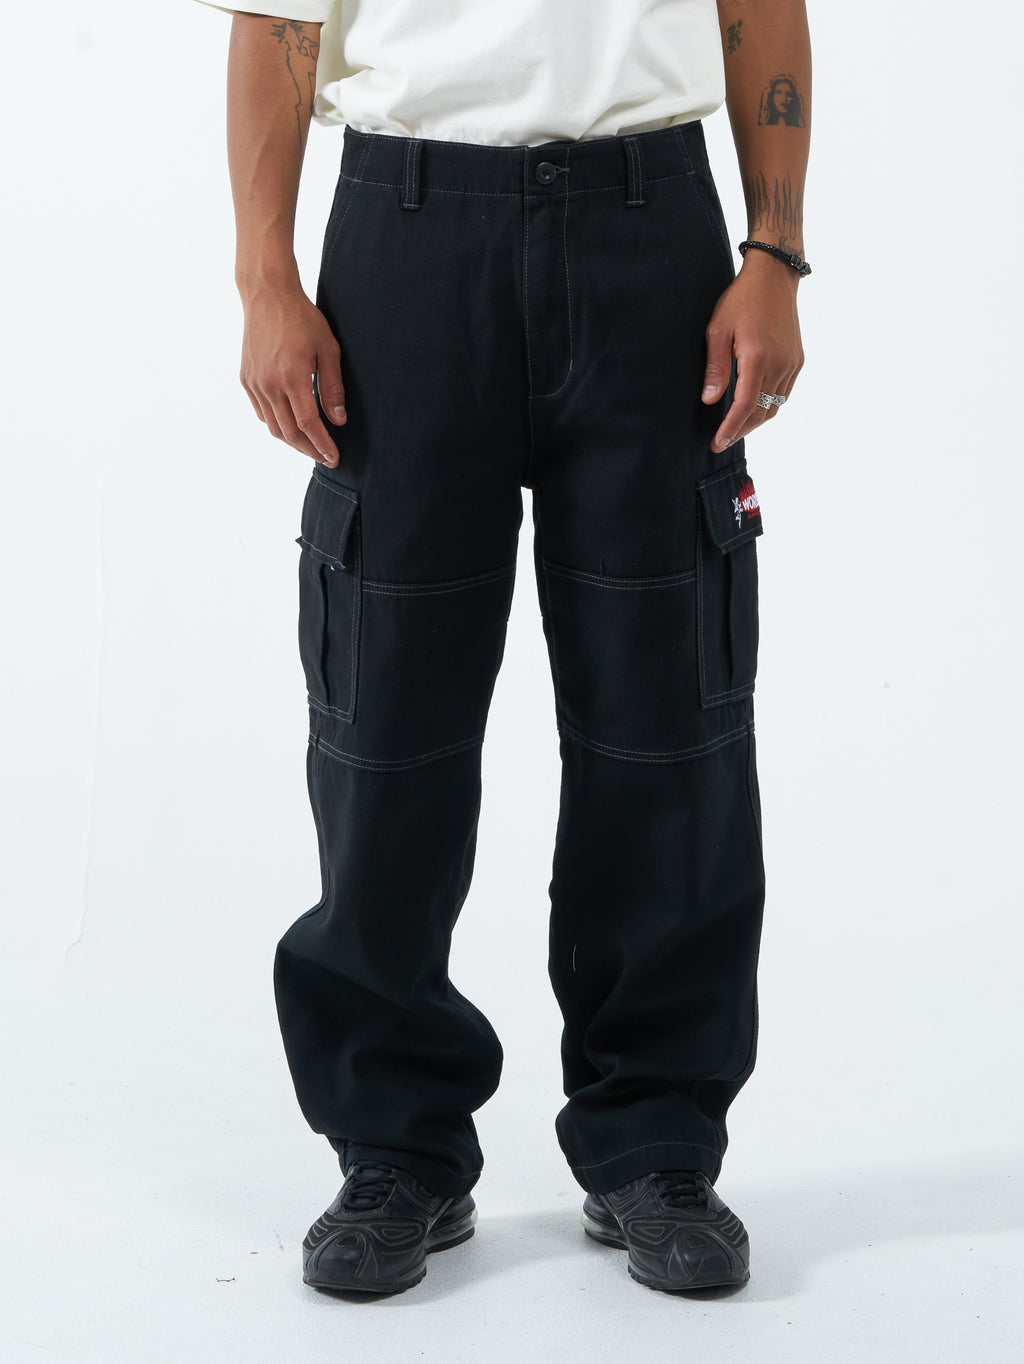 Russell Athletic Black Nylon Zip-Off Cargo Pants